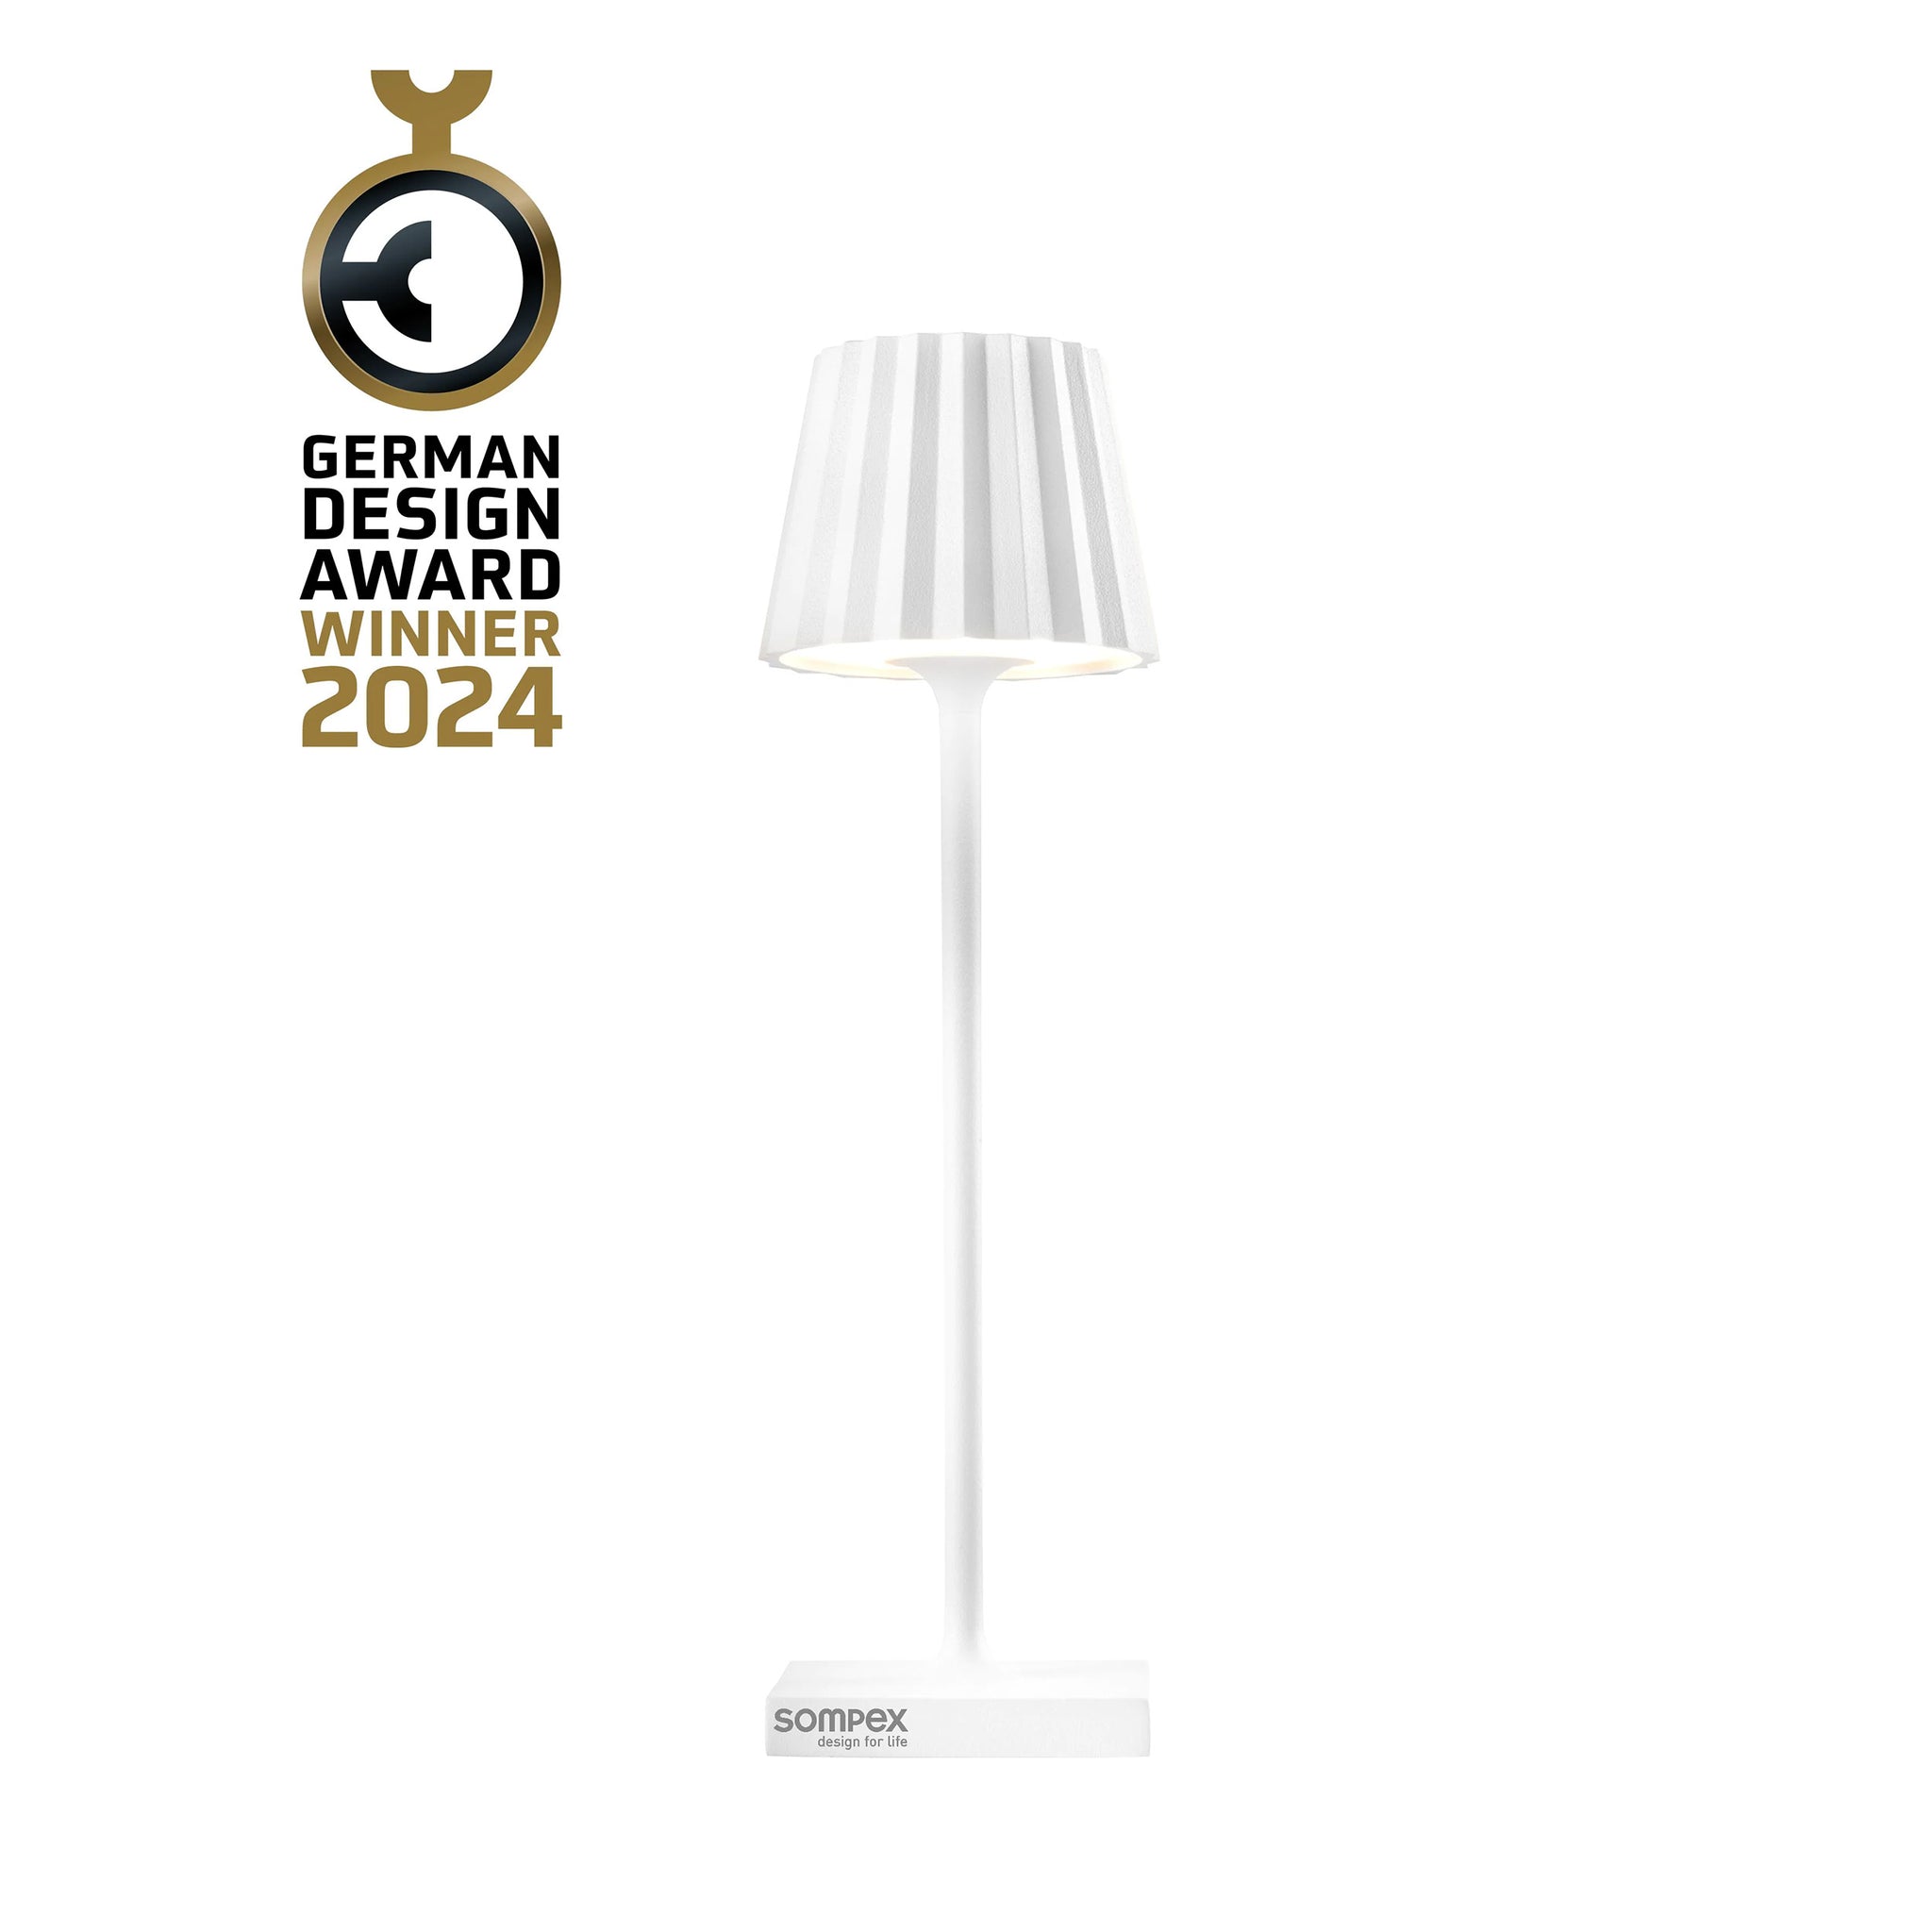 Sompex Troll Nano Wit Oplaadbare Tafellamp│Buitenverlichting│art. 78570│logo German Design Award Winner 2024